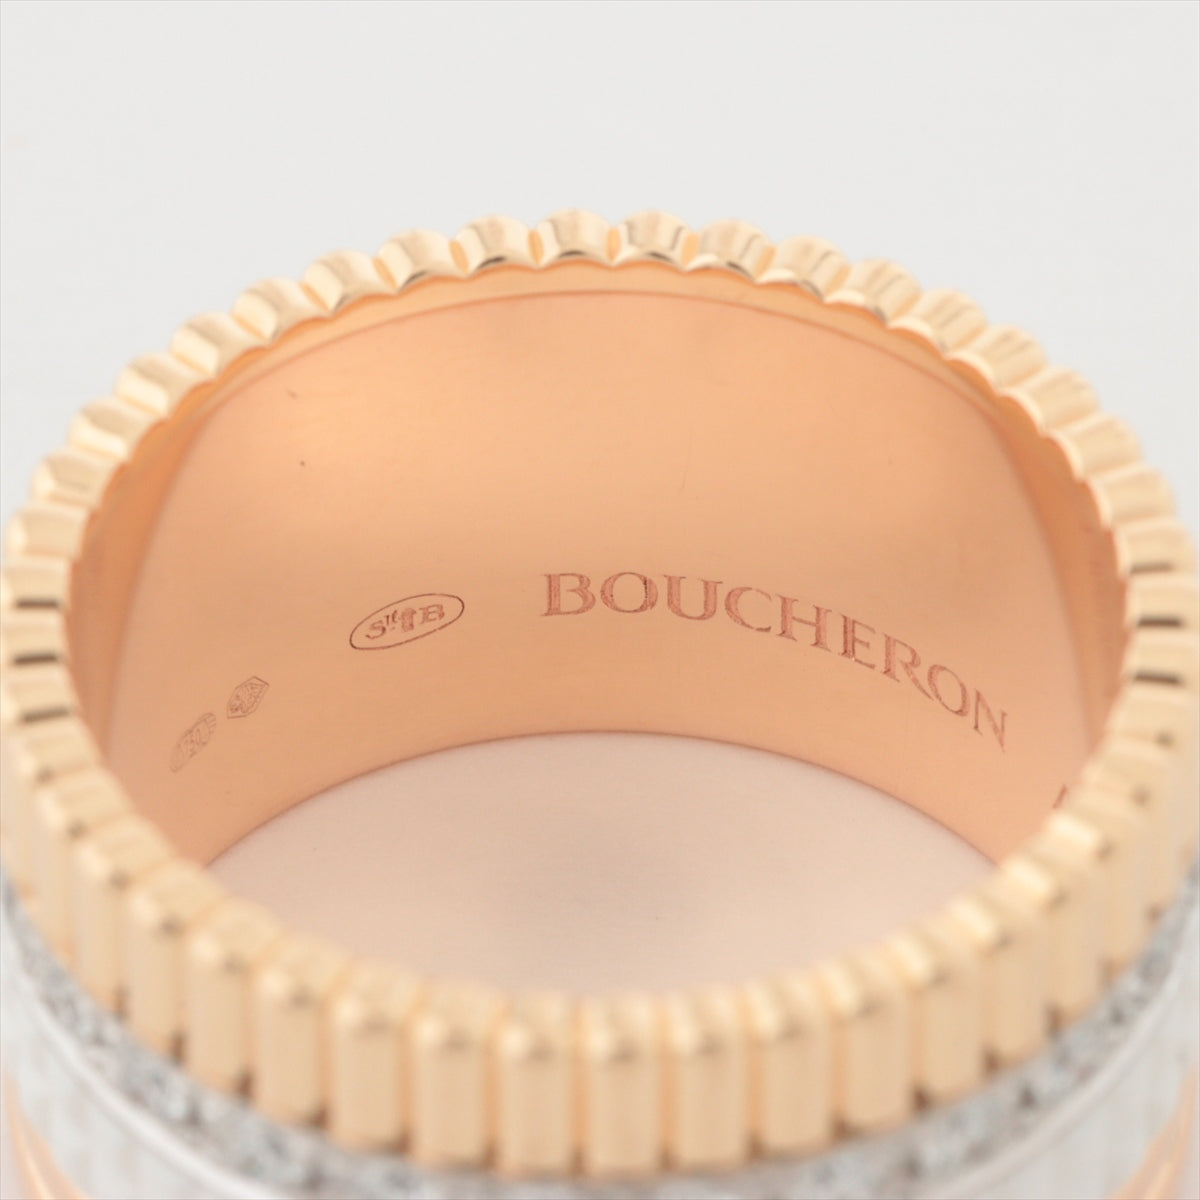 Boucheron Quatre White Large diamond rings 750(YG×PG×WG) 11.7g 53 PVD small cake JRG0159953